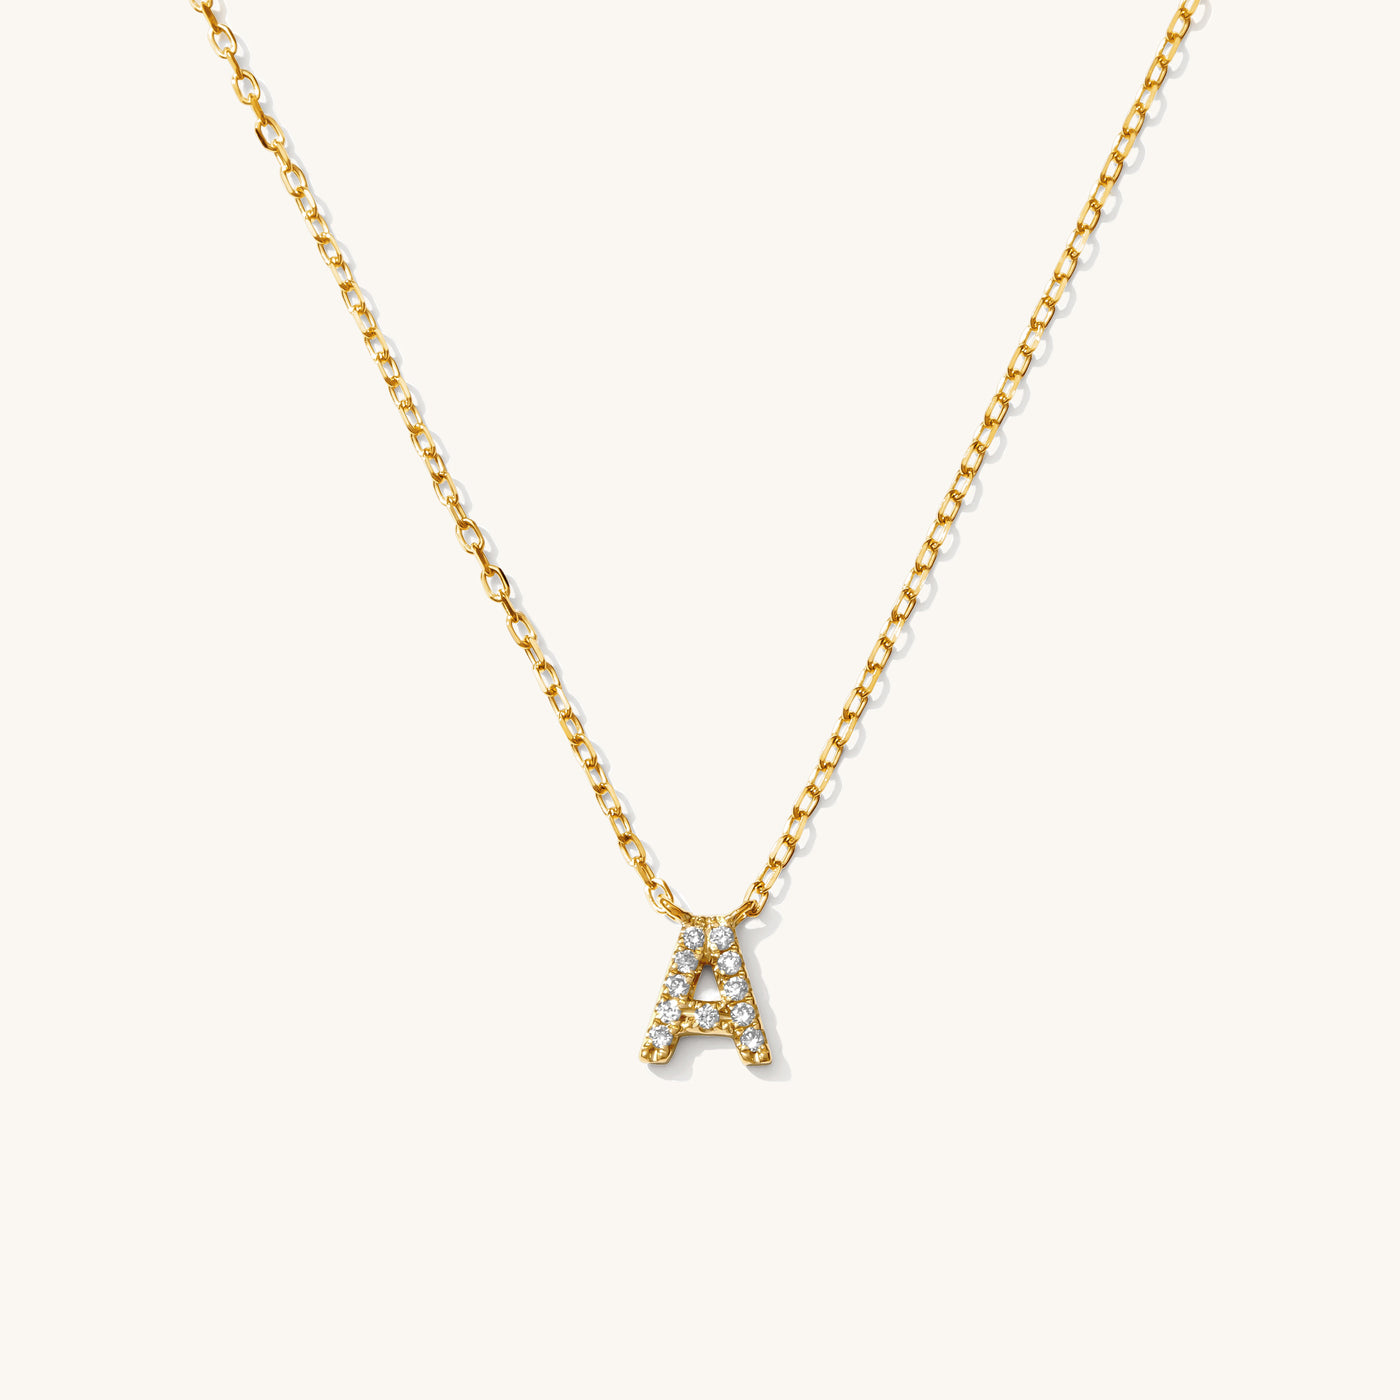 A Pavé Diamond Initial Necklace